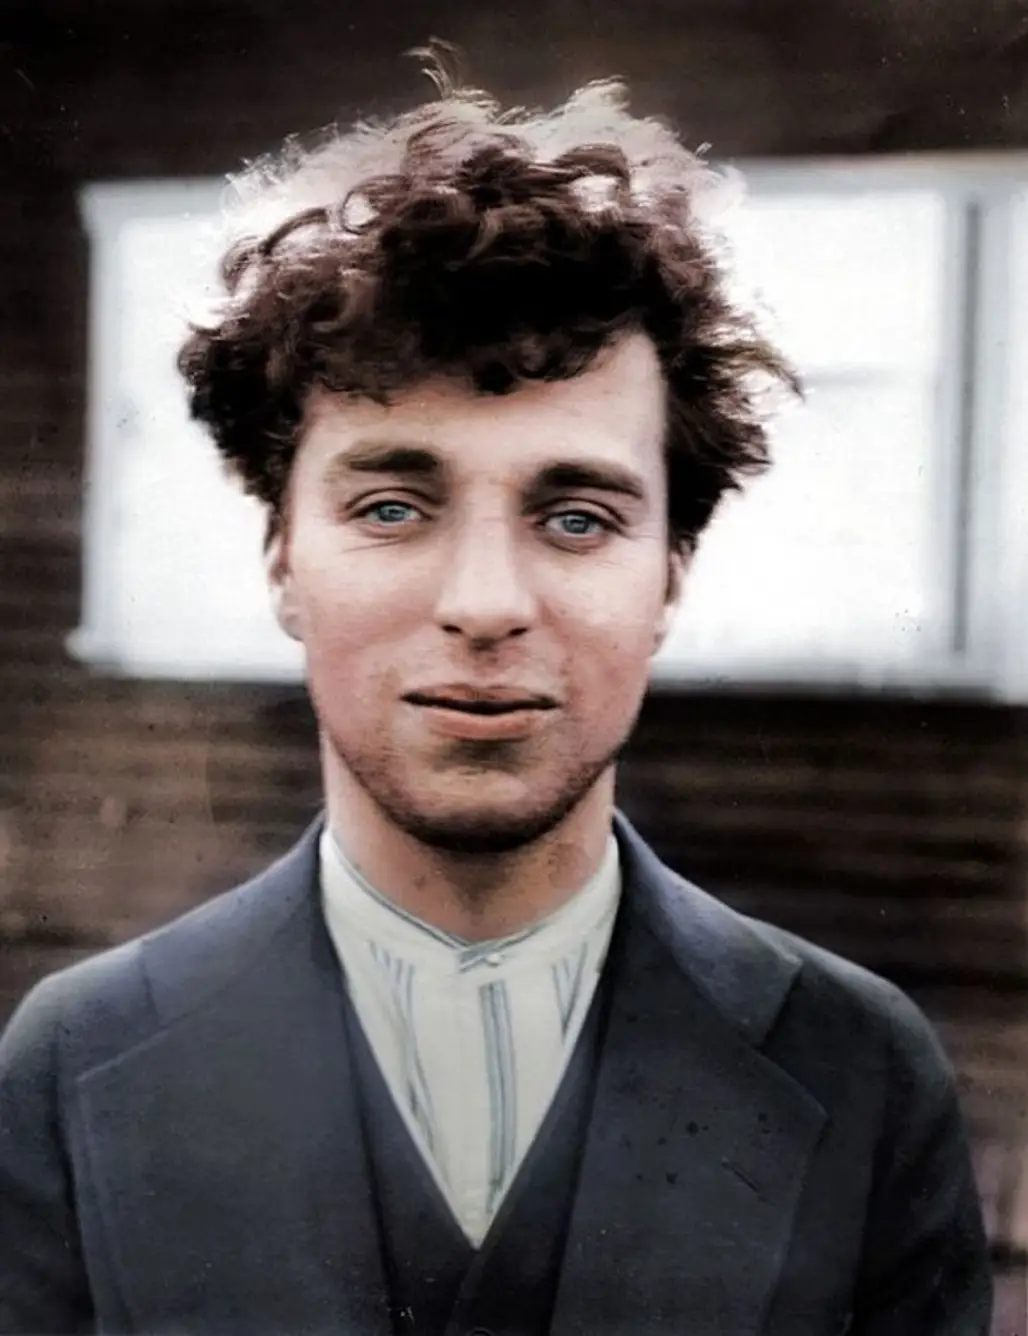 Charlie Chaplin in 1916